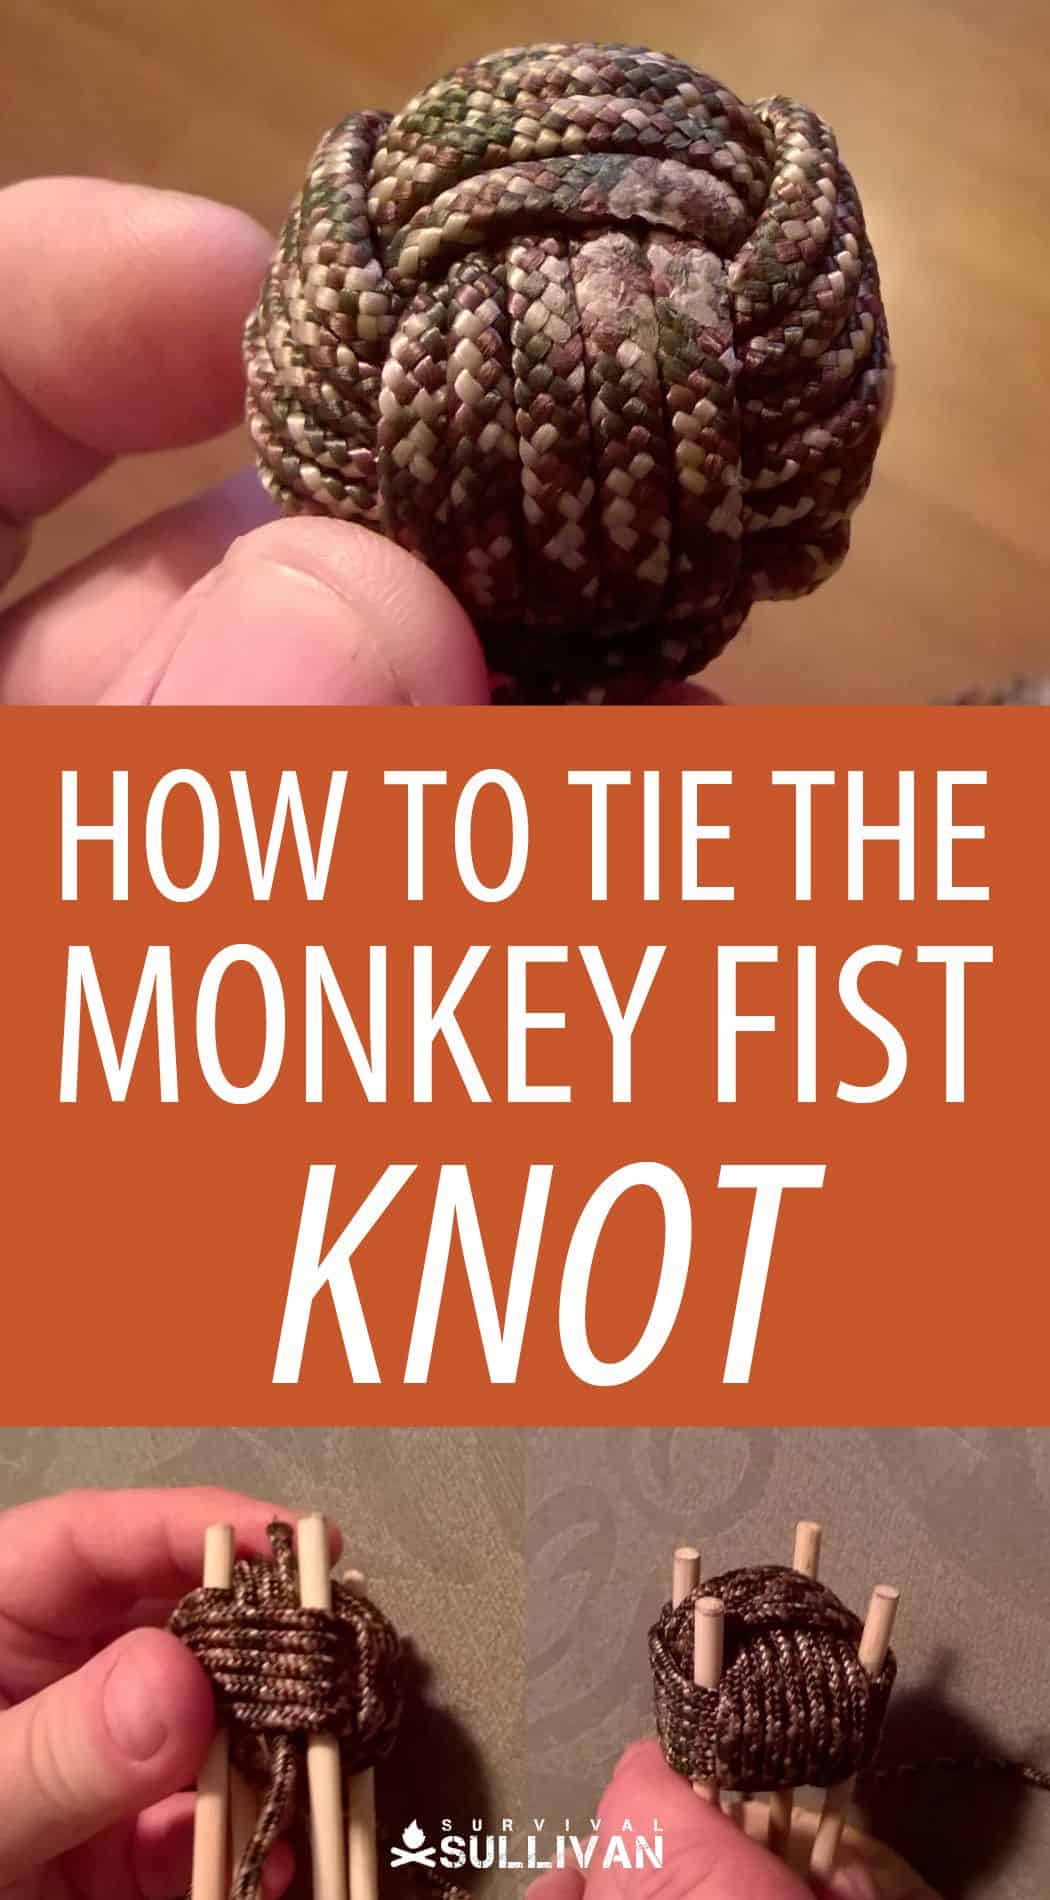 monkey fist knot pinterest image